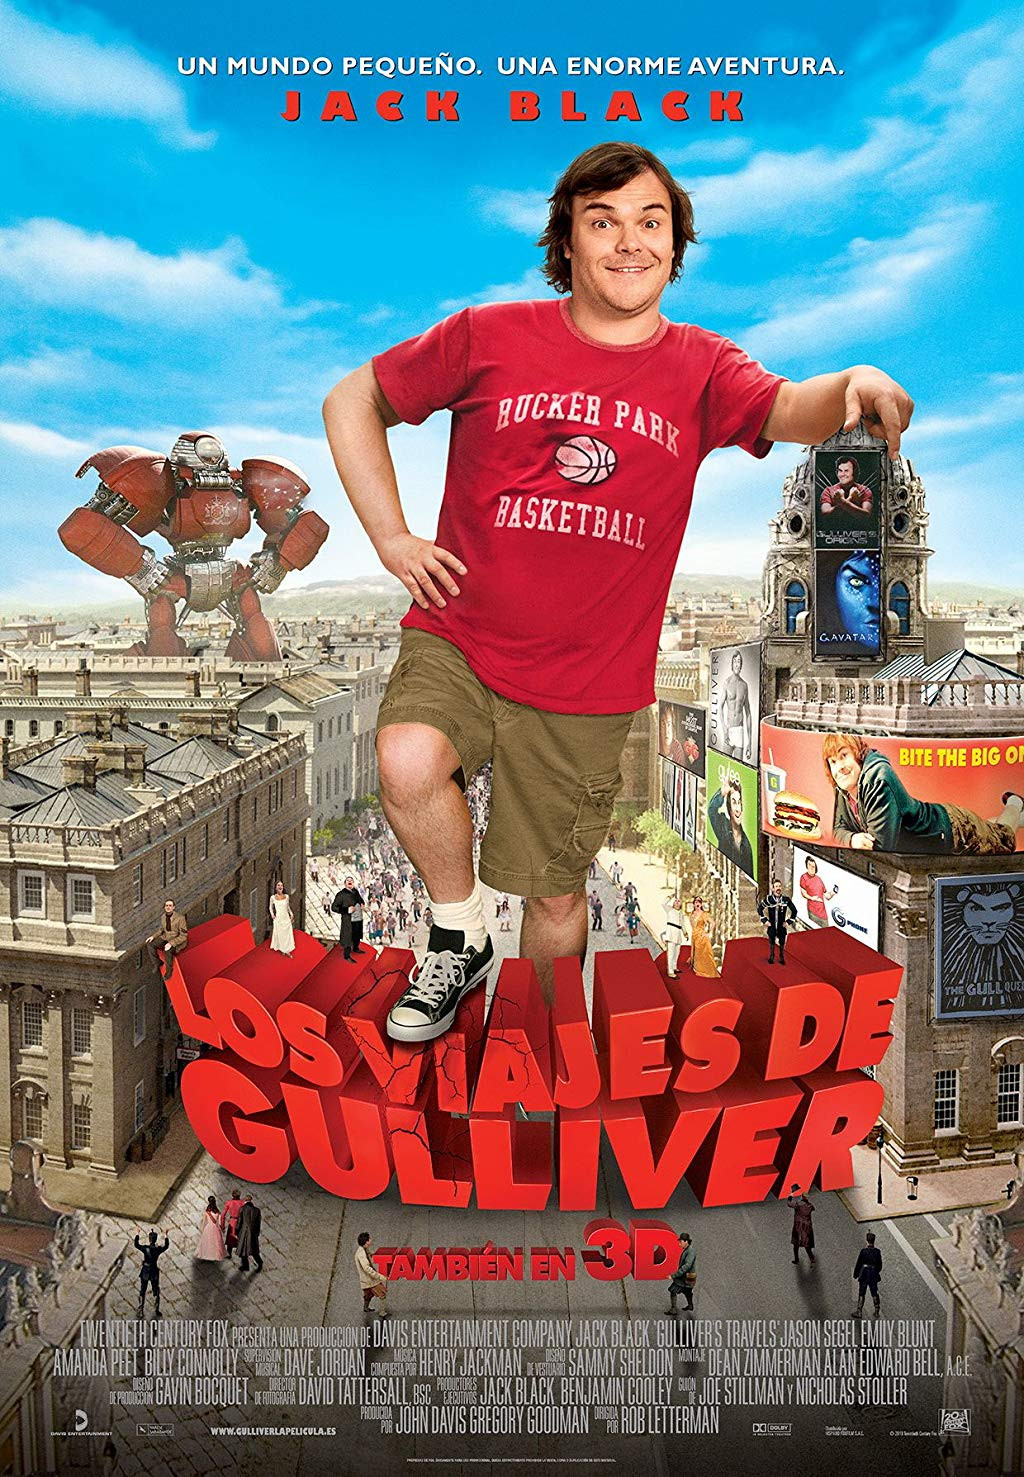 Cuộc Phiêu Lưu Của Gulliver – Gulliver’s Travels (2010) Full HD Vietsub